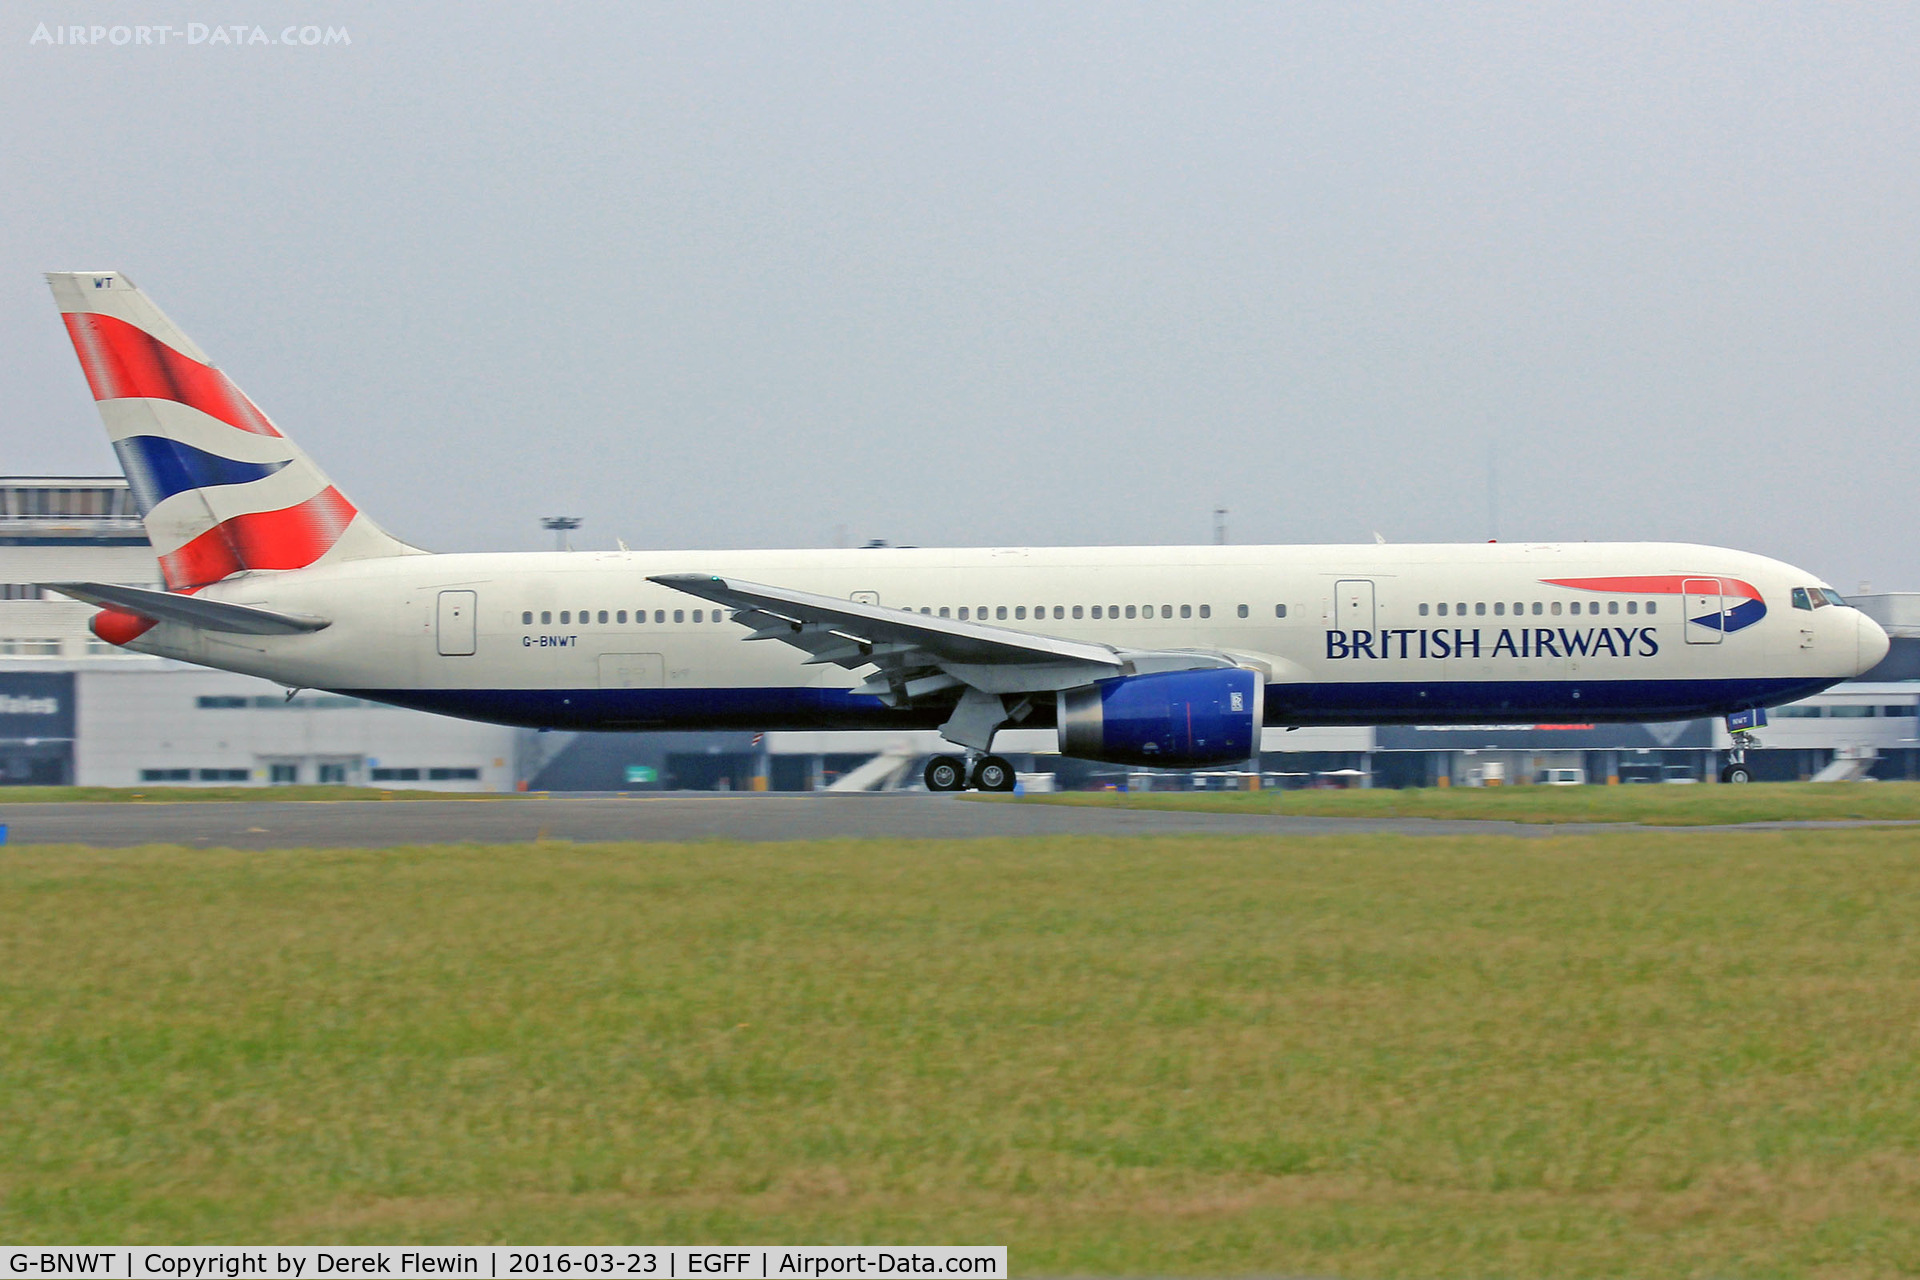 G-BNWT, 1992 Boeing 767-336 C/N 25828, 767-336, British Airways Cardiff based, callsign Speedbird 9153, seen departing runway 12 for Orlando Sanford for scrapping.